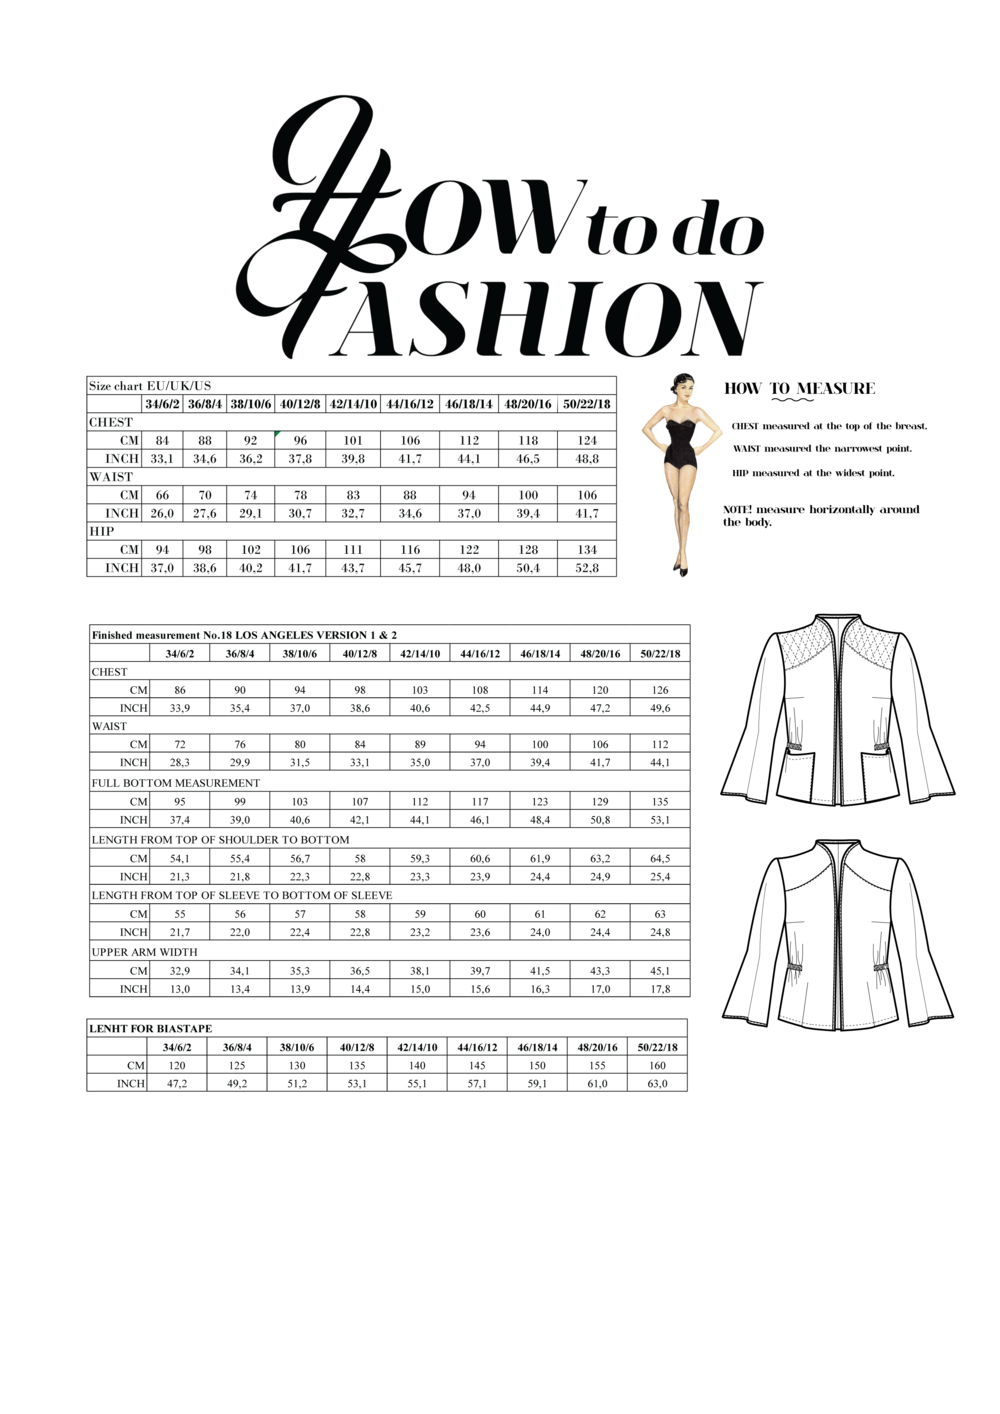 How to Do Fashion No. 18 Los Angeles Jacket